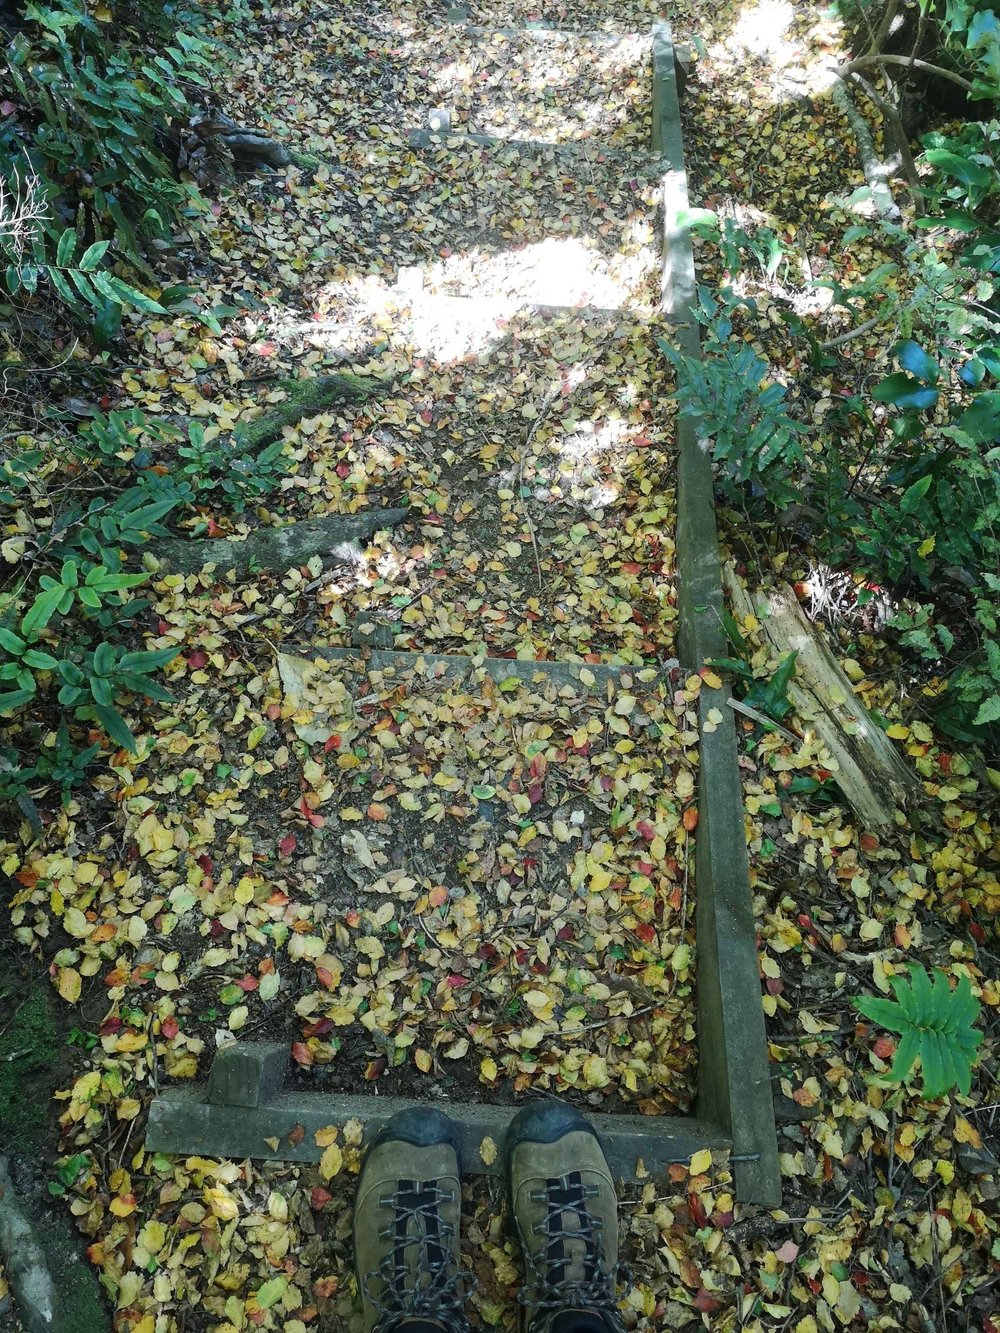 leaves underfoot